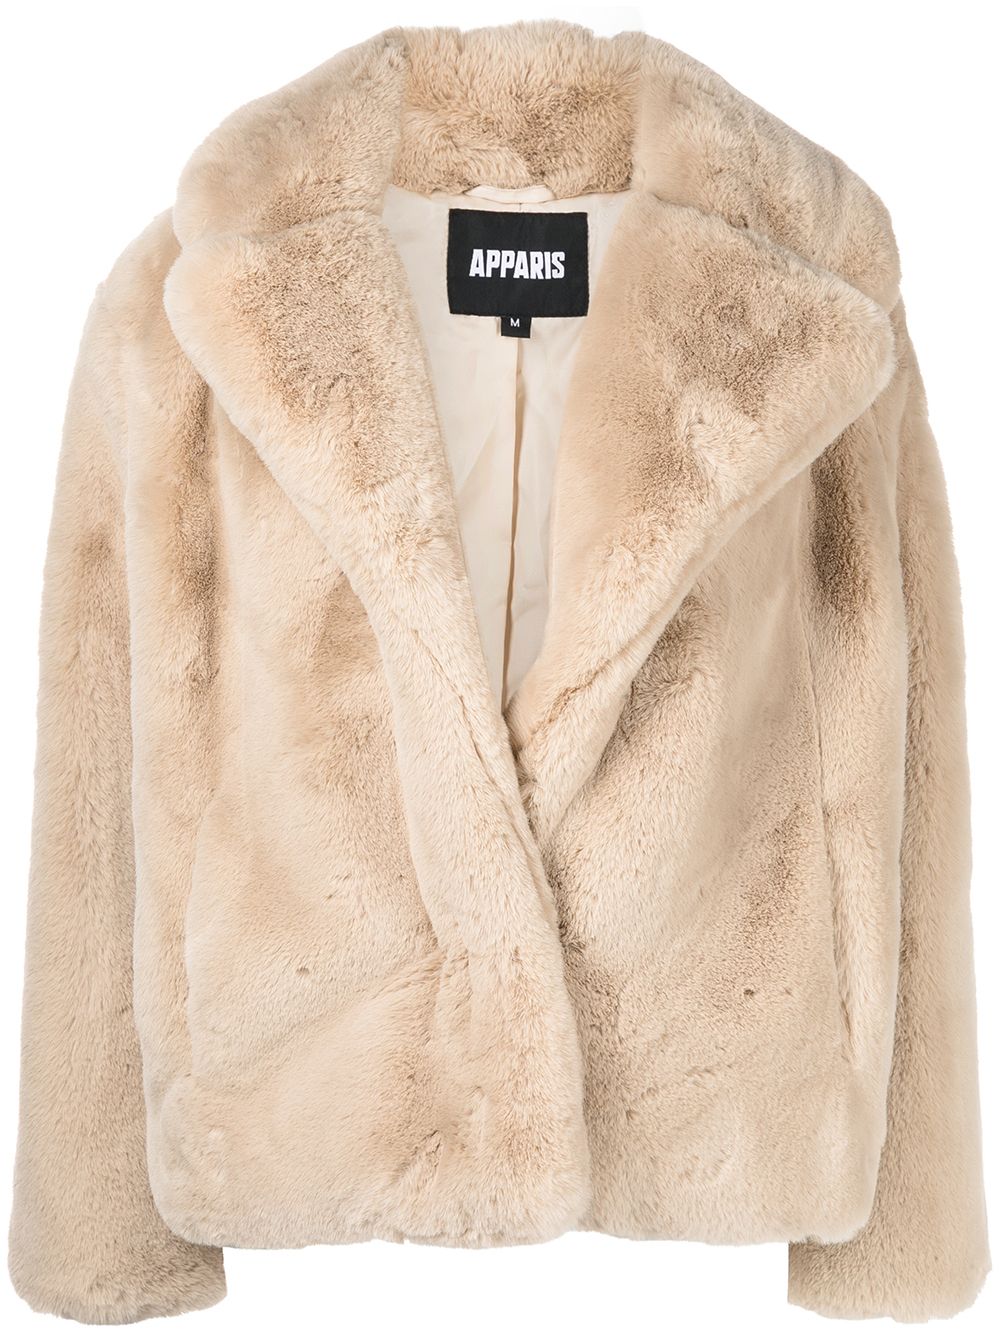 Gucci Tan Faux Fur Coat: The Best Faux Fur Coat Of The Season